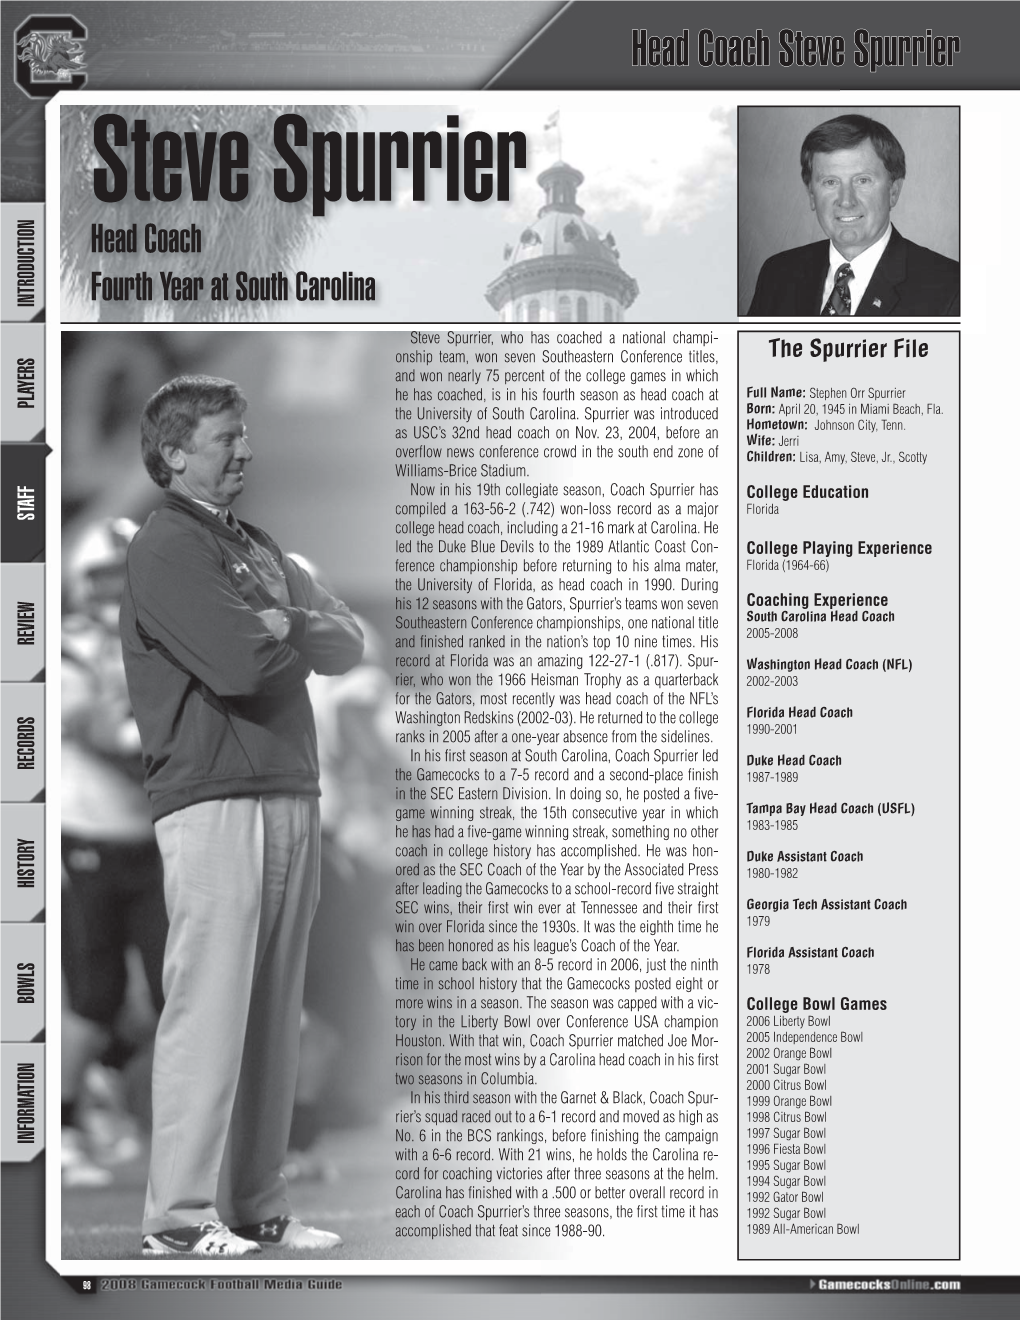 Head Coach Steve Spurrier Accomplished That Featsince1988-90